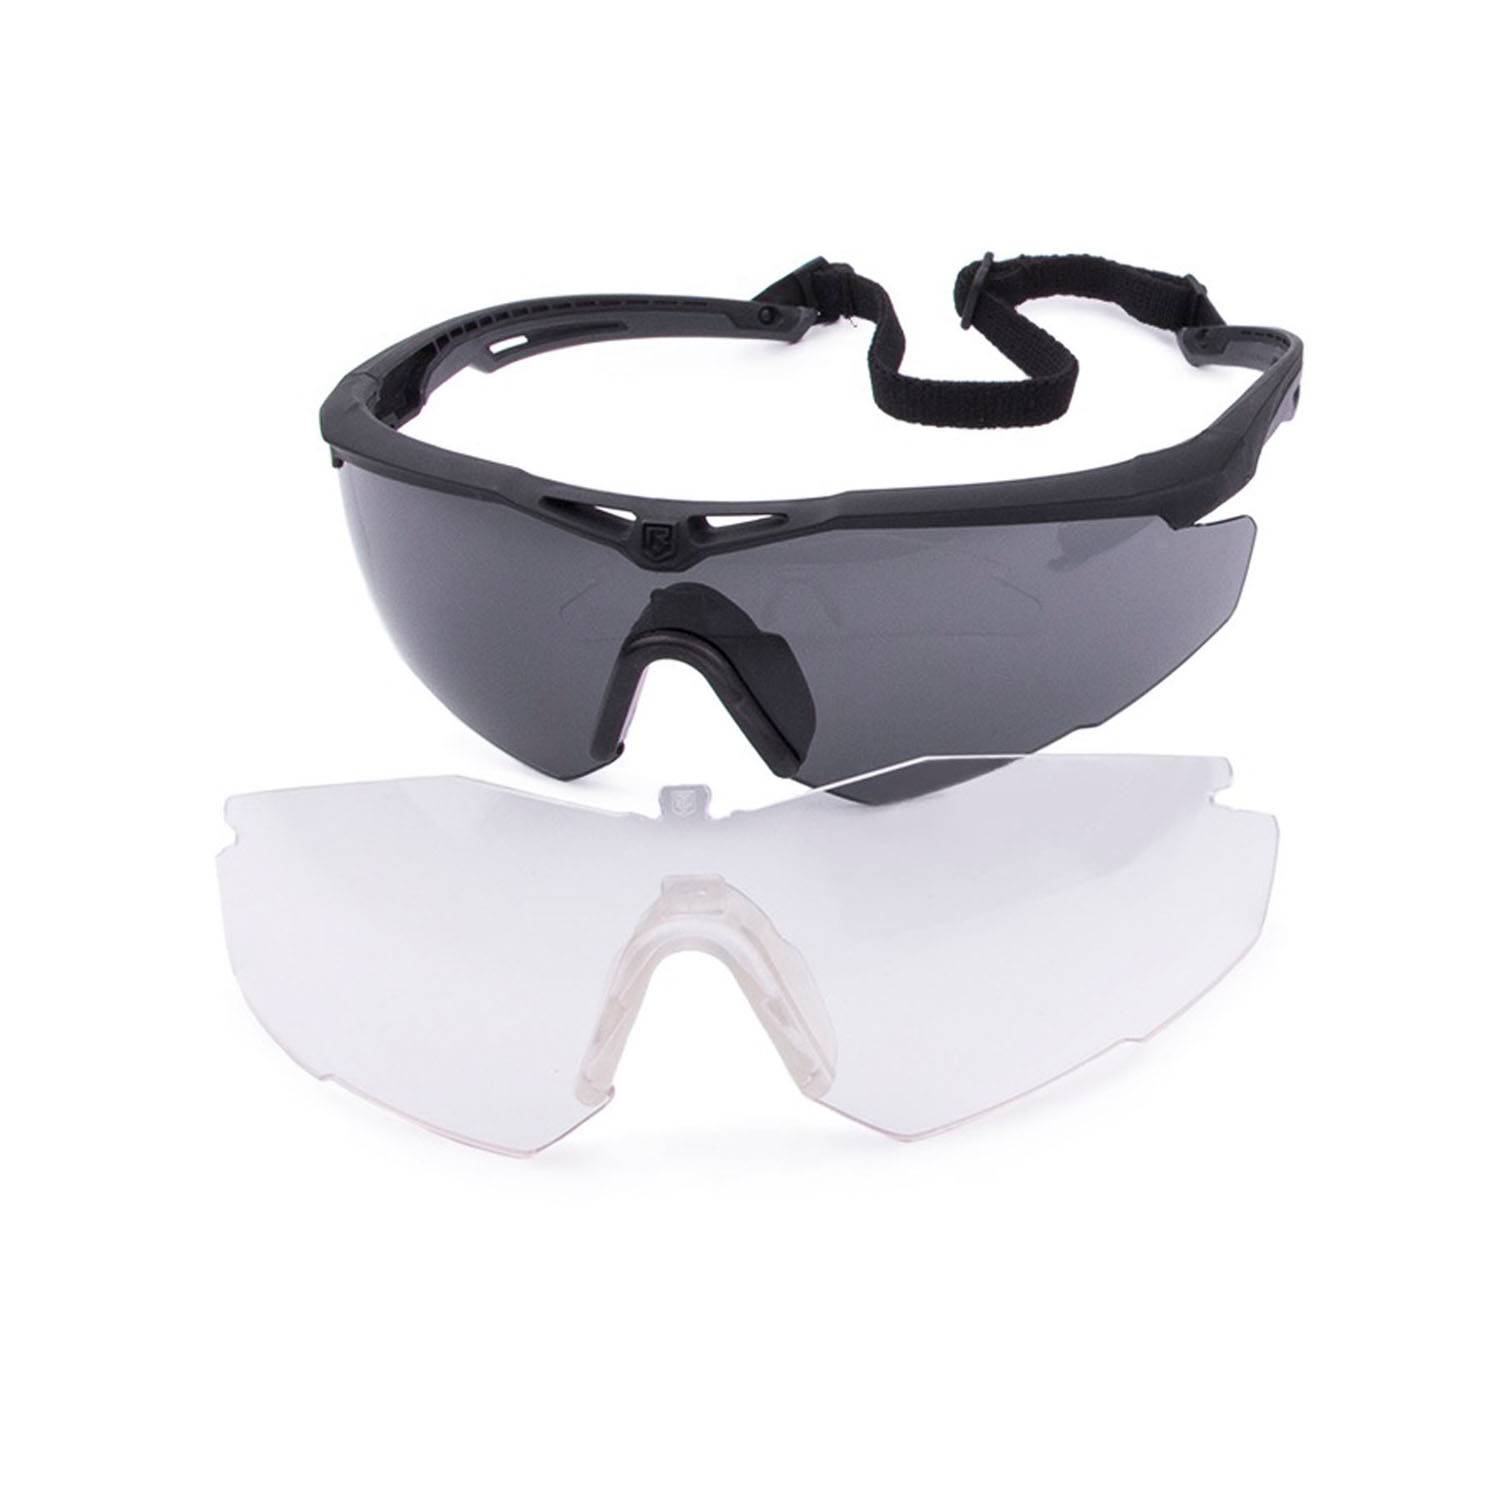 Revision StingerHawk Eyewear System - Essential Kit